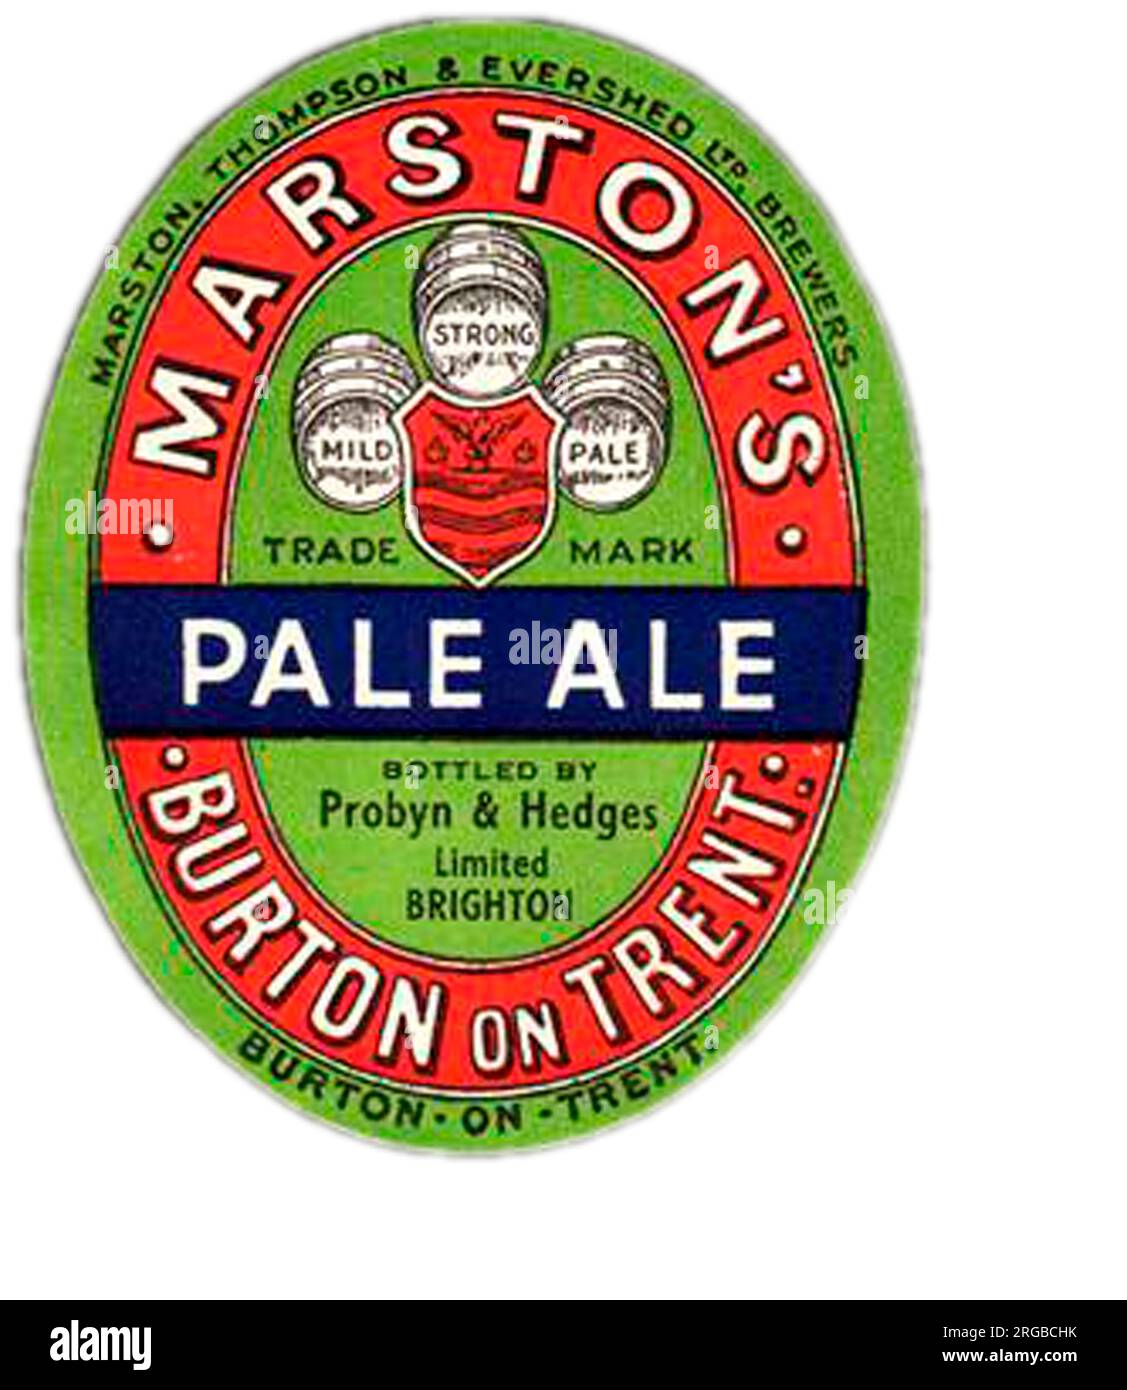 Marston's Pale Ale Stock Photo